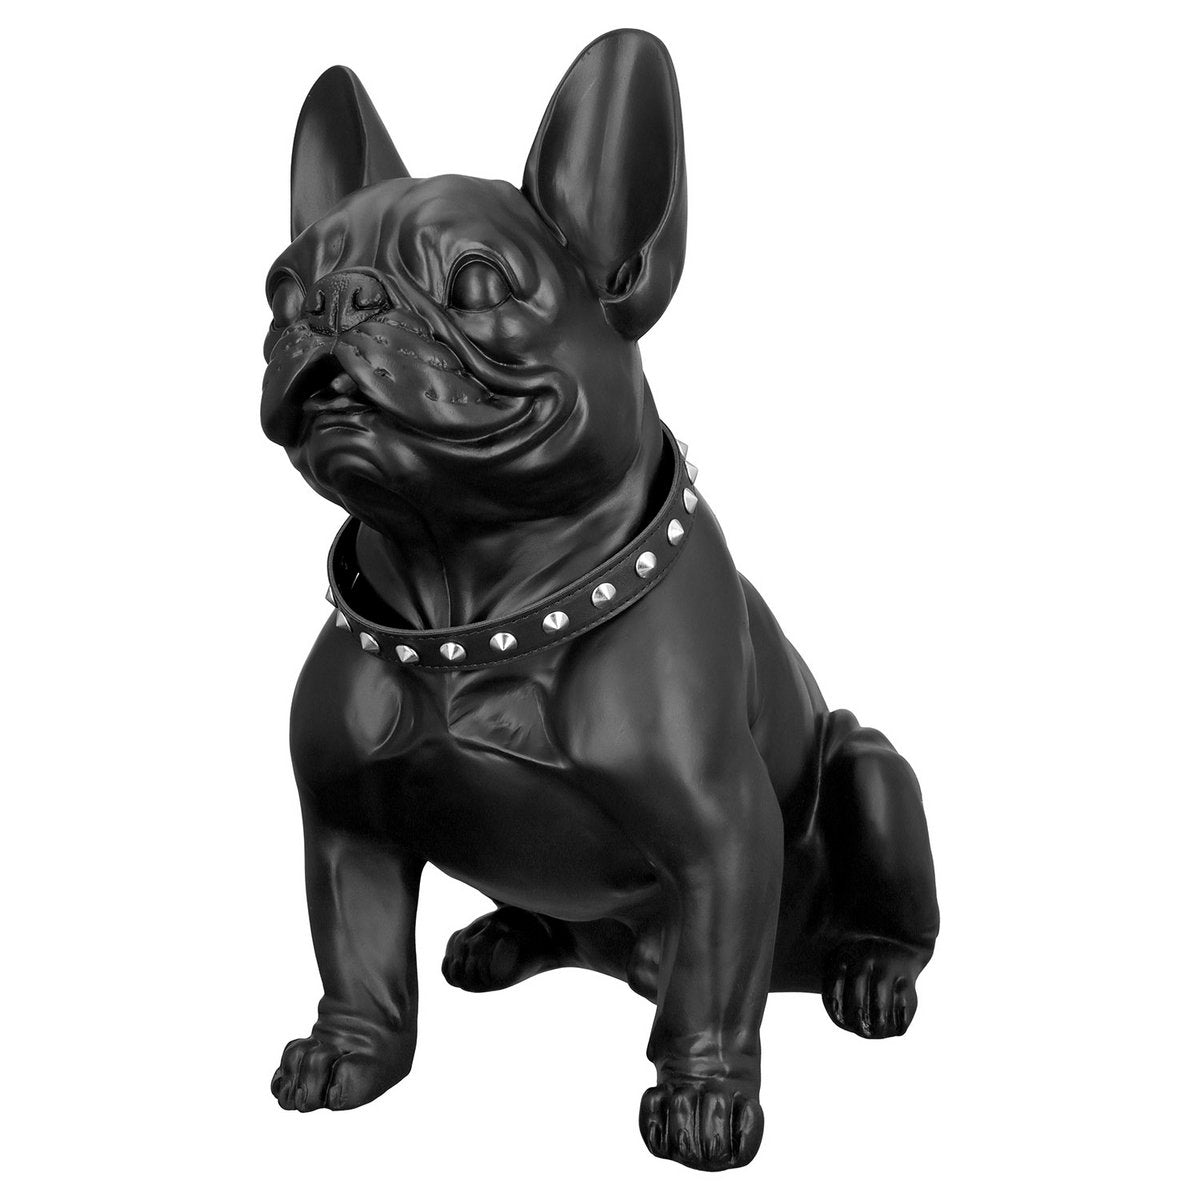 Poly Figur "Bulldog" schwarz matt H.42,5cm